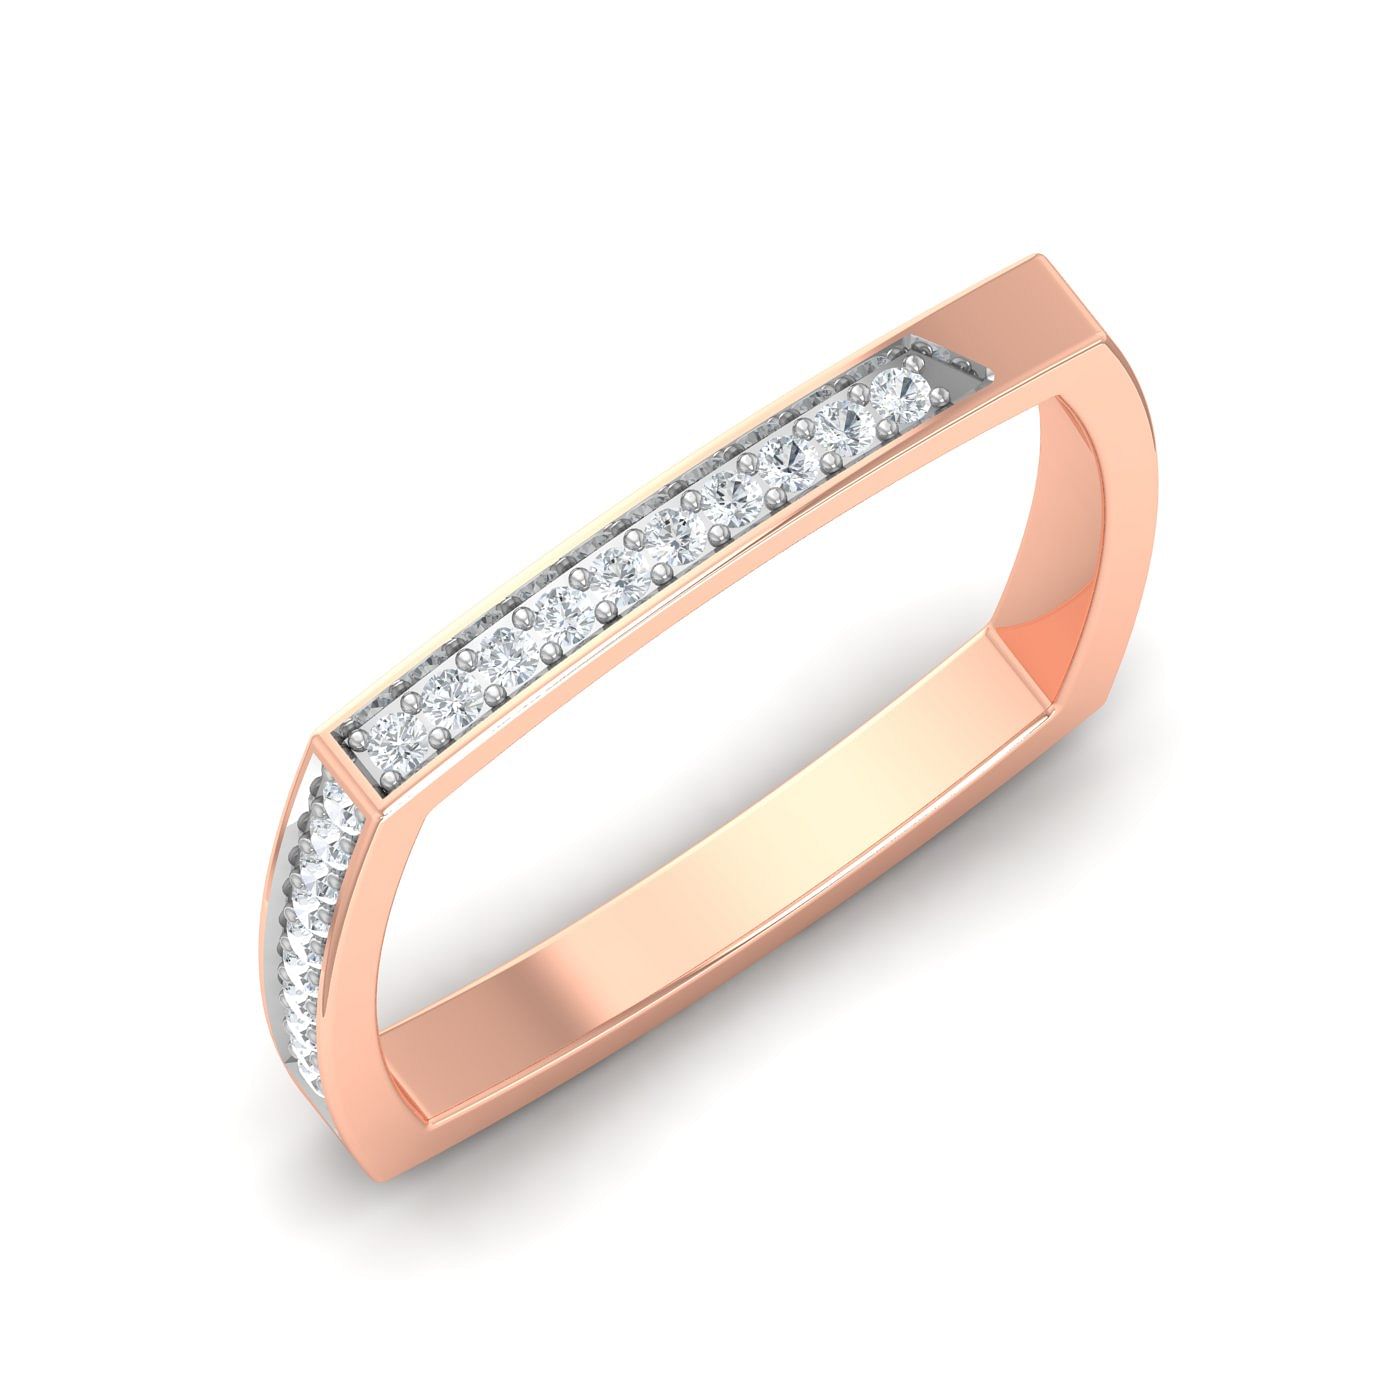 Square Design Rose Gold Diamond Ring Band For Women